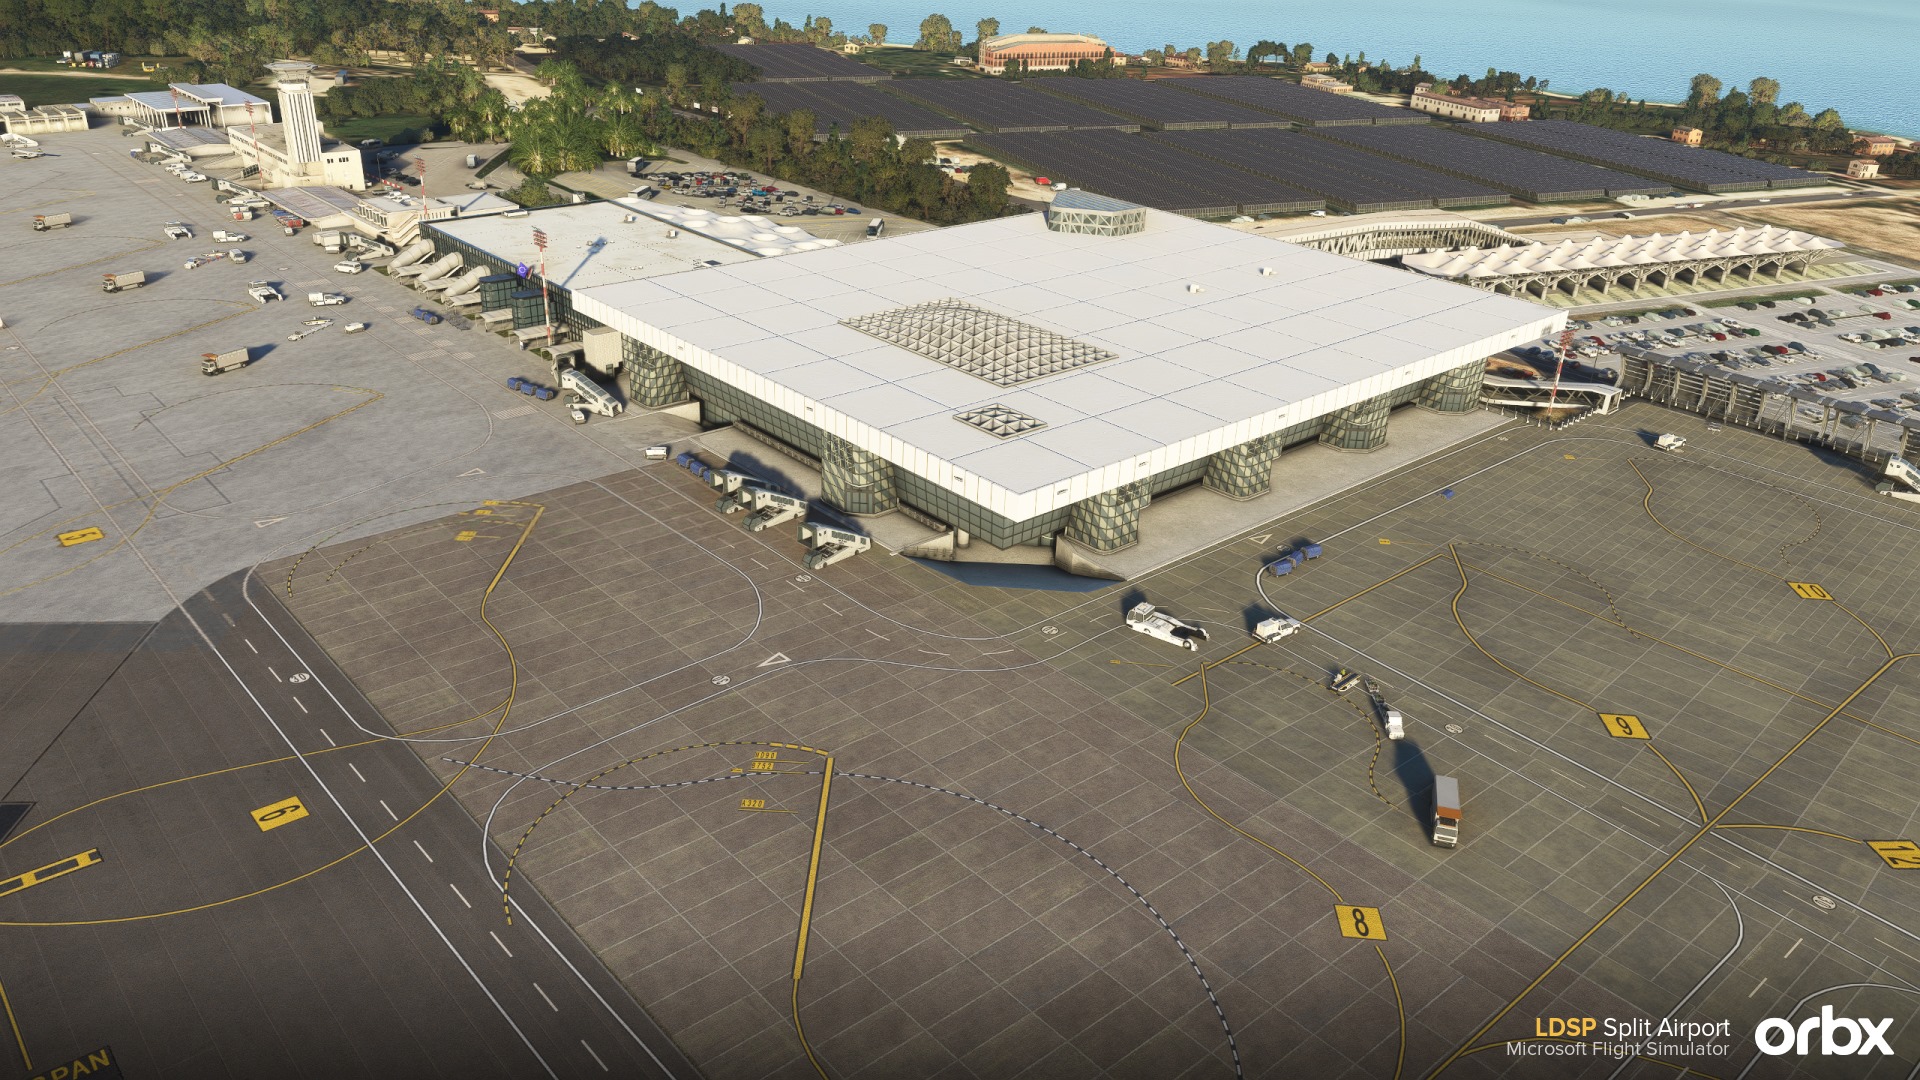 Orbx Releases Split Airport for MSFS - Microsoft Flight Simulator, Orbx